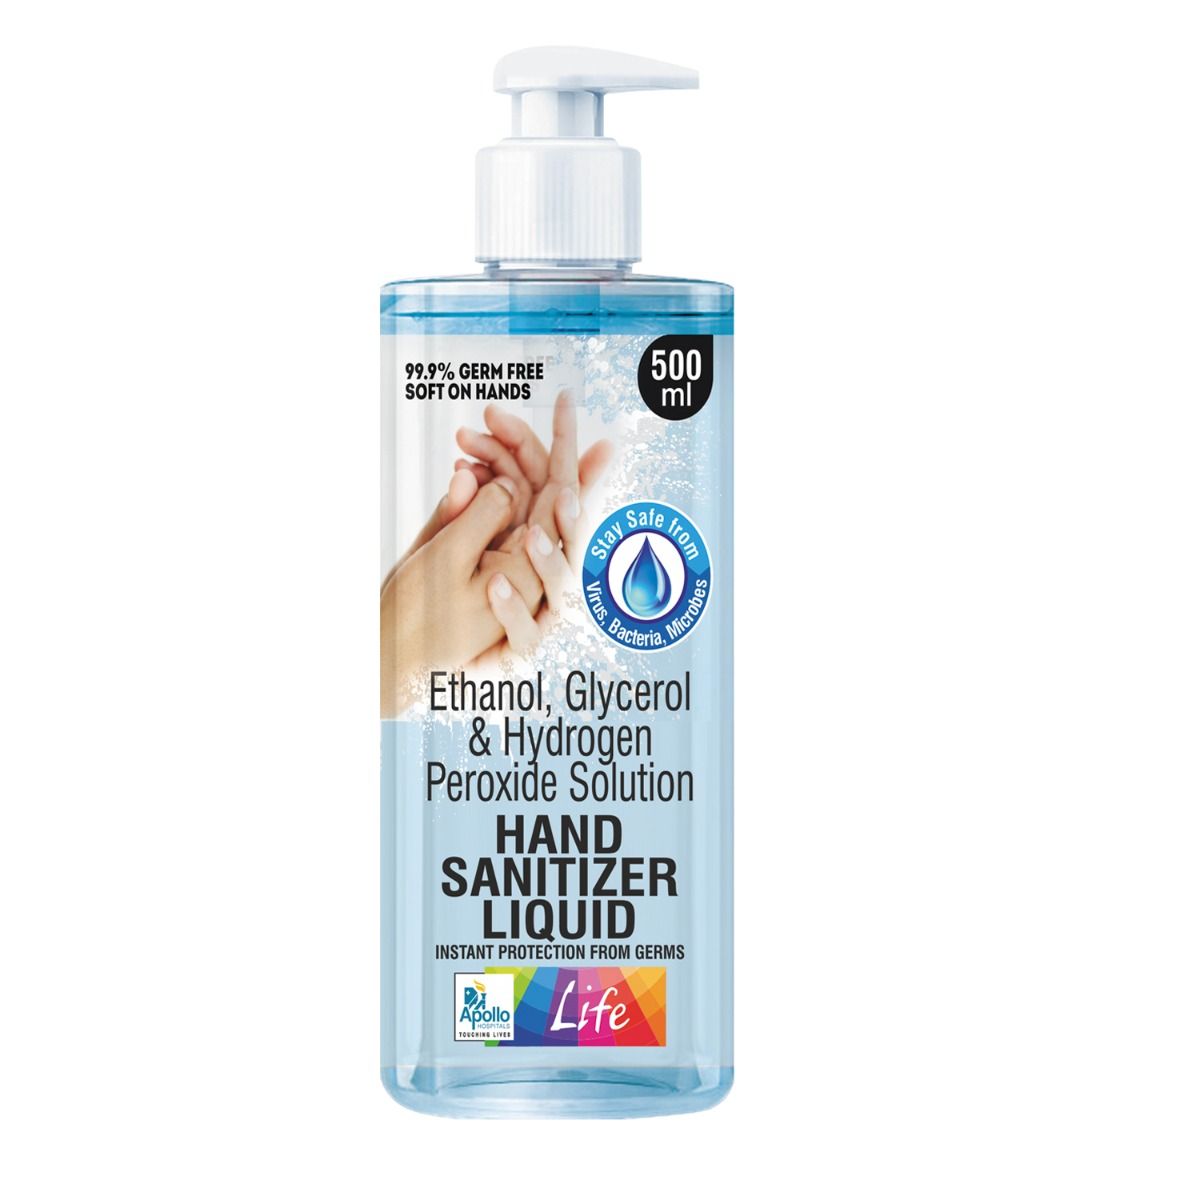 Buy Apollo Life Hand Sanitizer Liquid With Dispenser, 500 ml Online